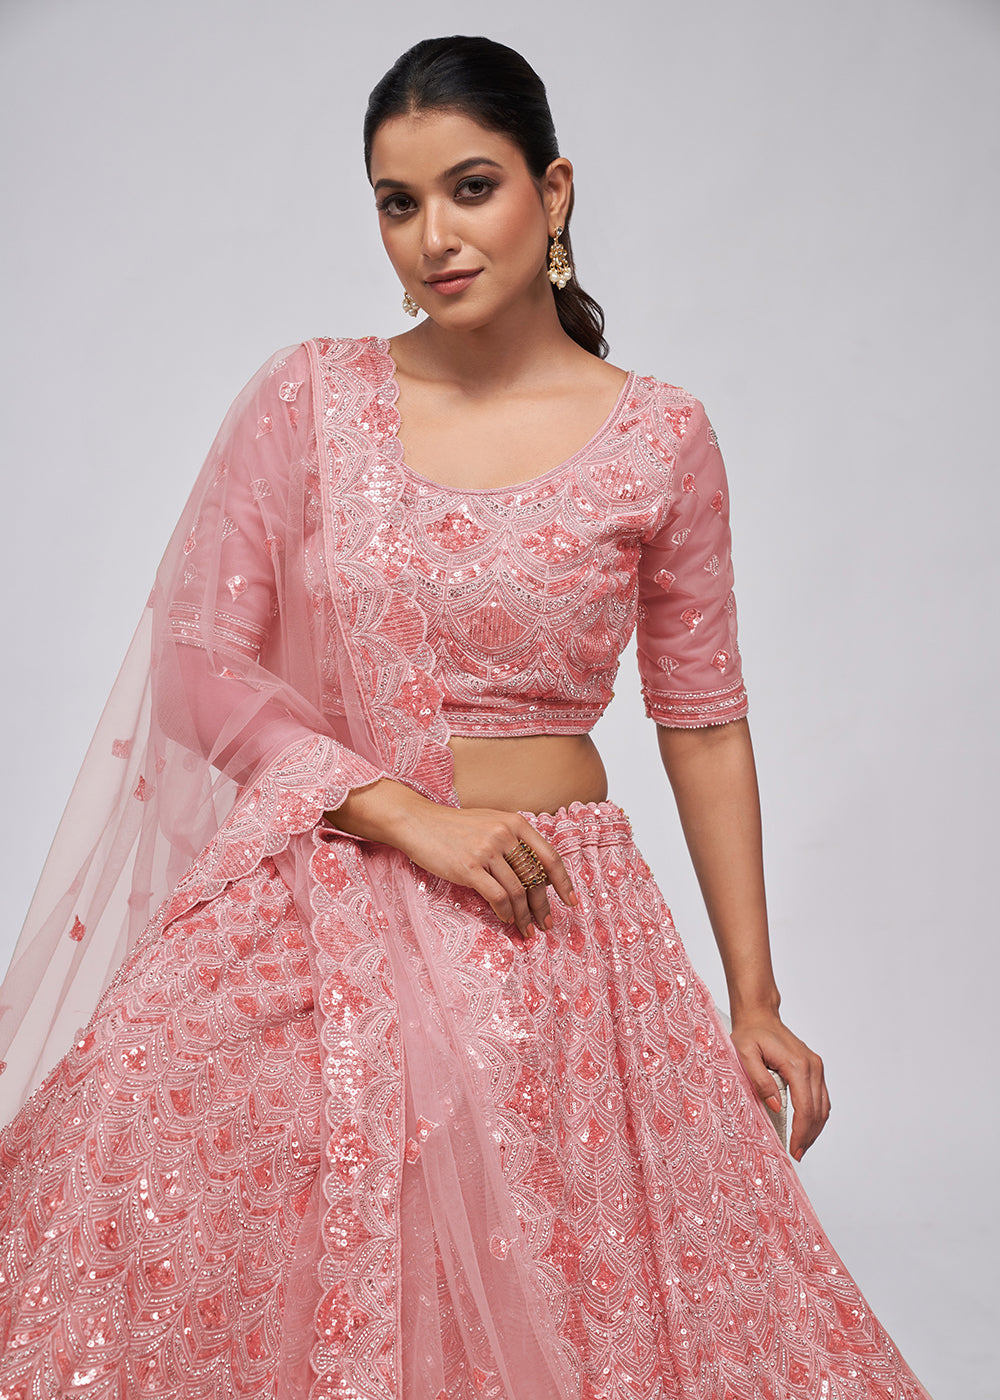 Buy Now Dazzling Pink Bridal Embroidered Designer Lehenga Choli Online in USA, UK, Canada & Worldwide at Empress Clothing.